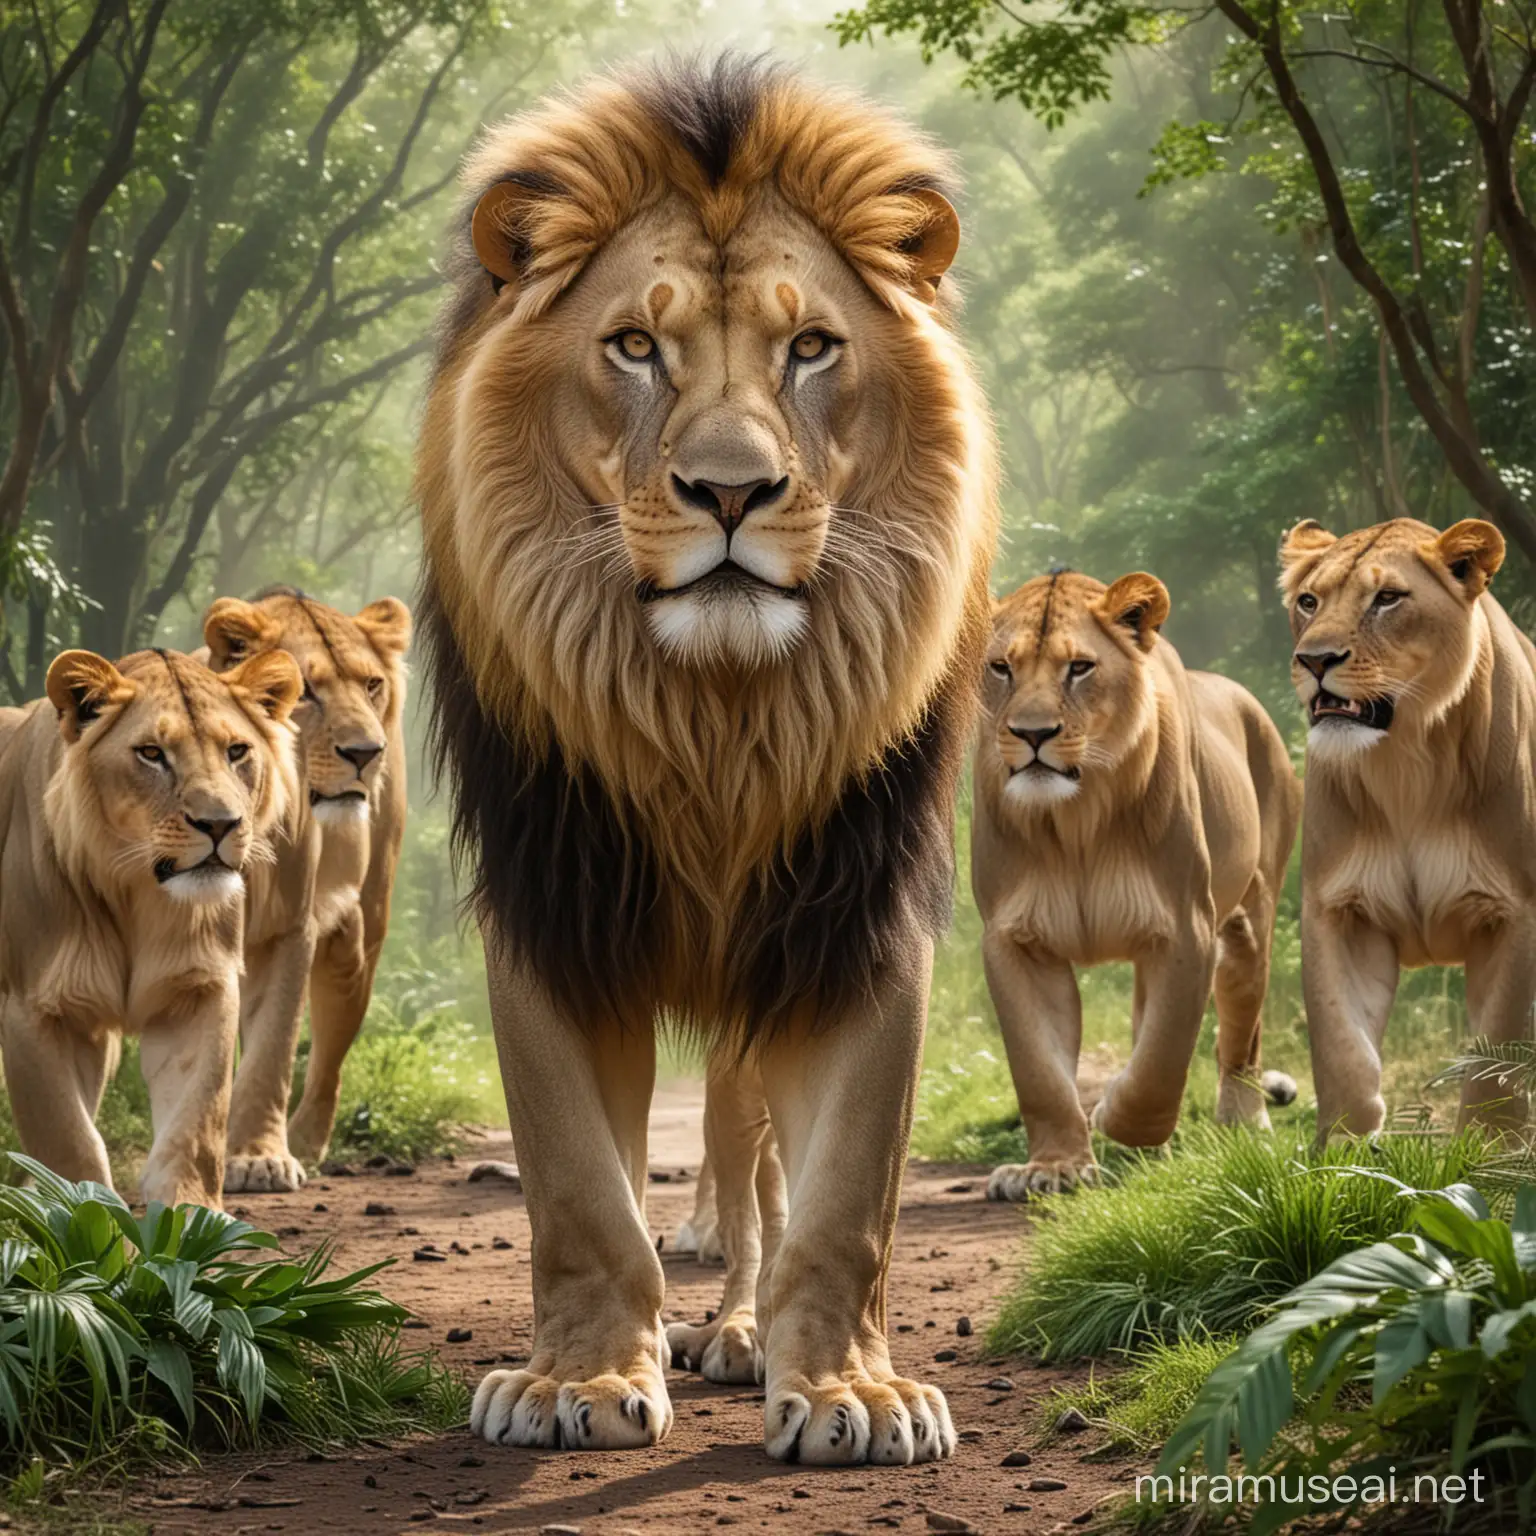 Majestic Lion Leading Pride in Lush Jungle Habitat